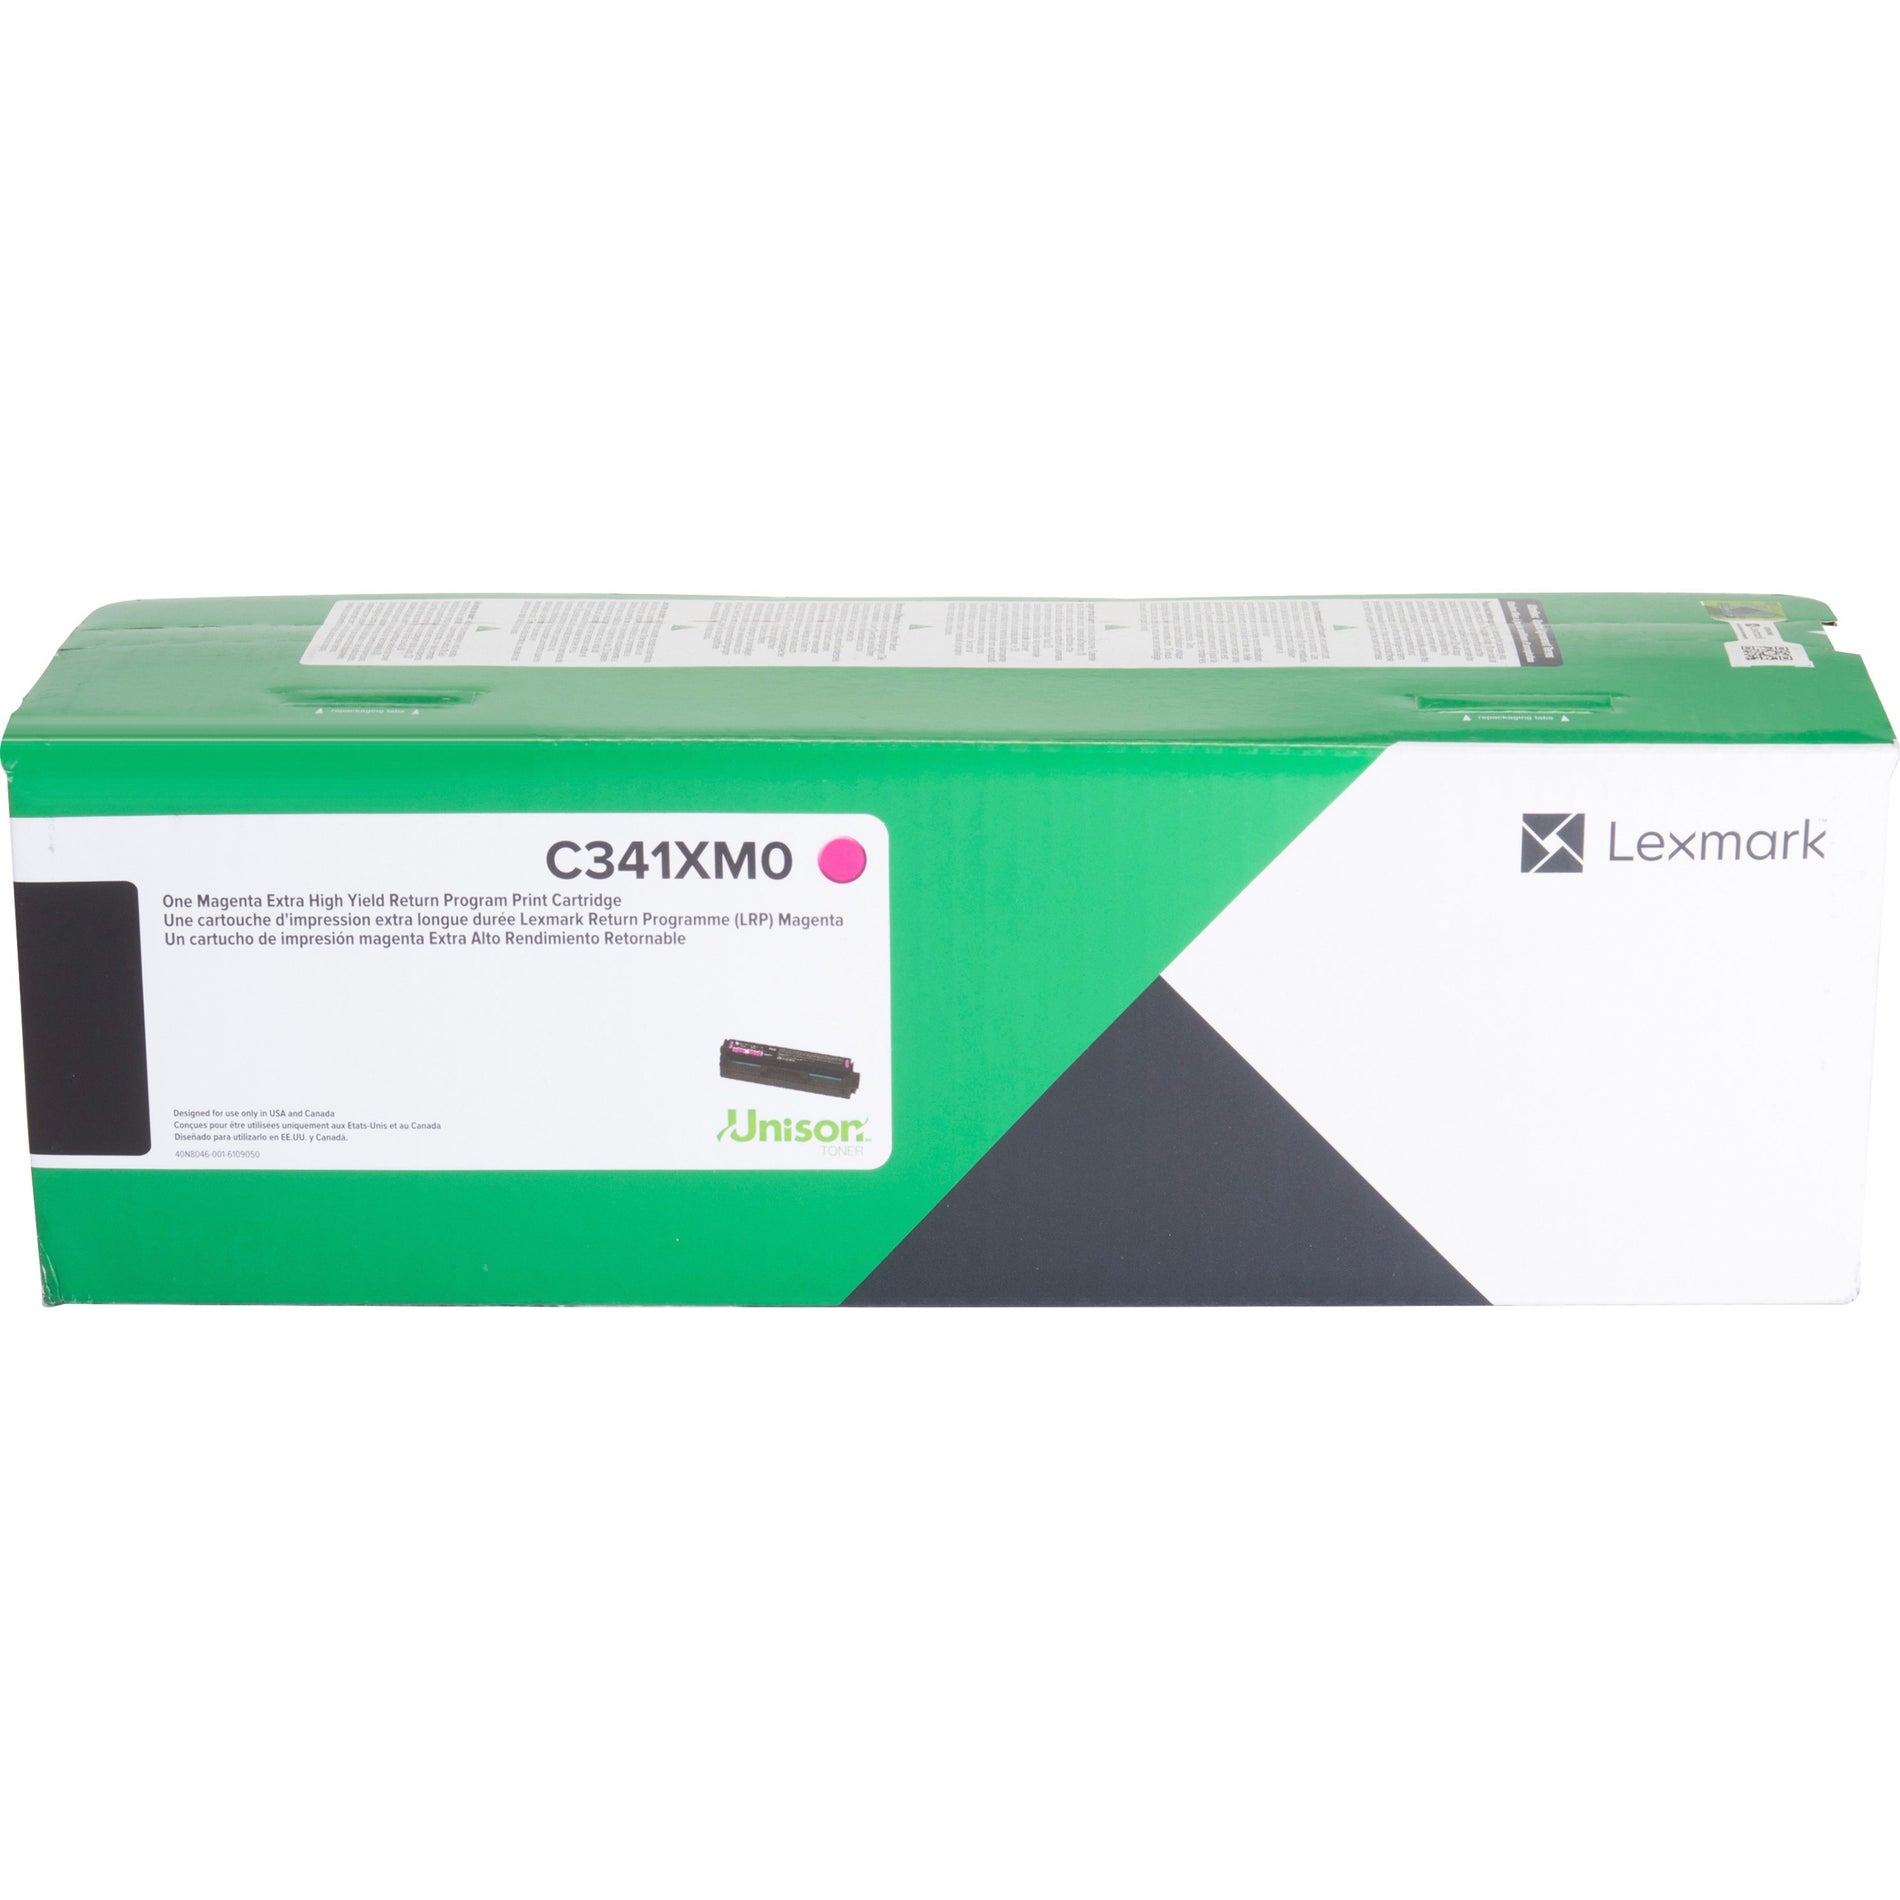 Lexmark C341XM0 Magenta Extra High Yield Return Program Print Cartridge, Toner Cartridge - 4500 Pages